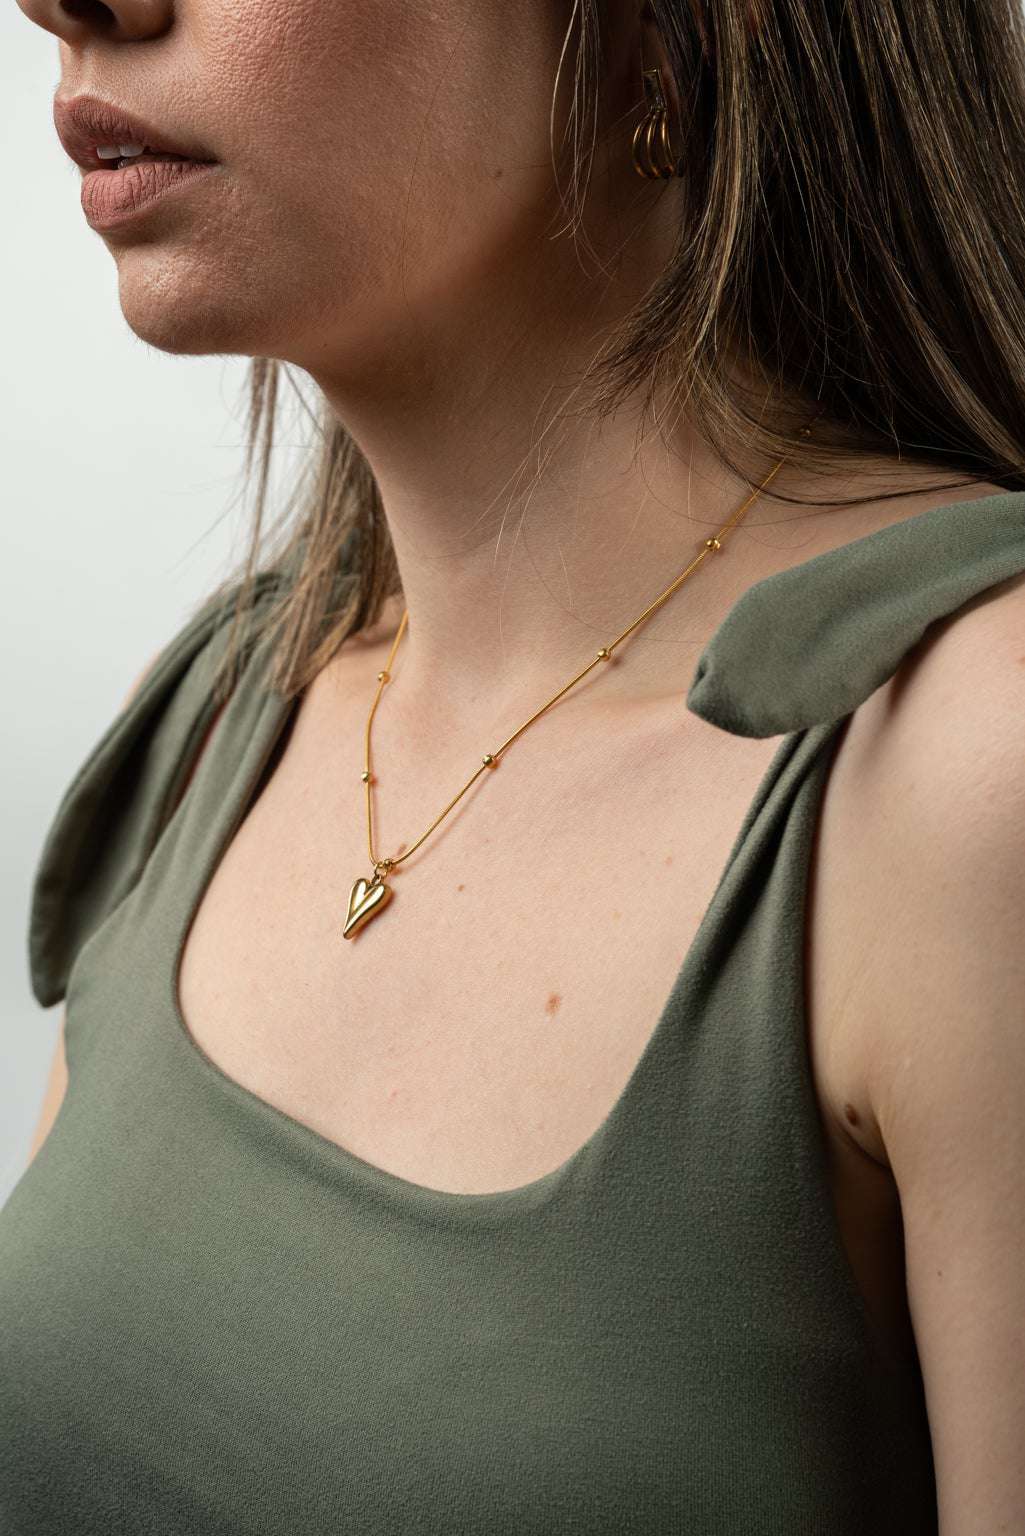 Heart Charm Amanda Necklace - Classics Jewelry Gifts